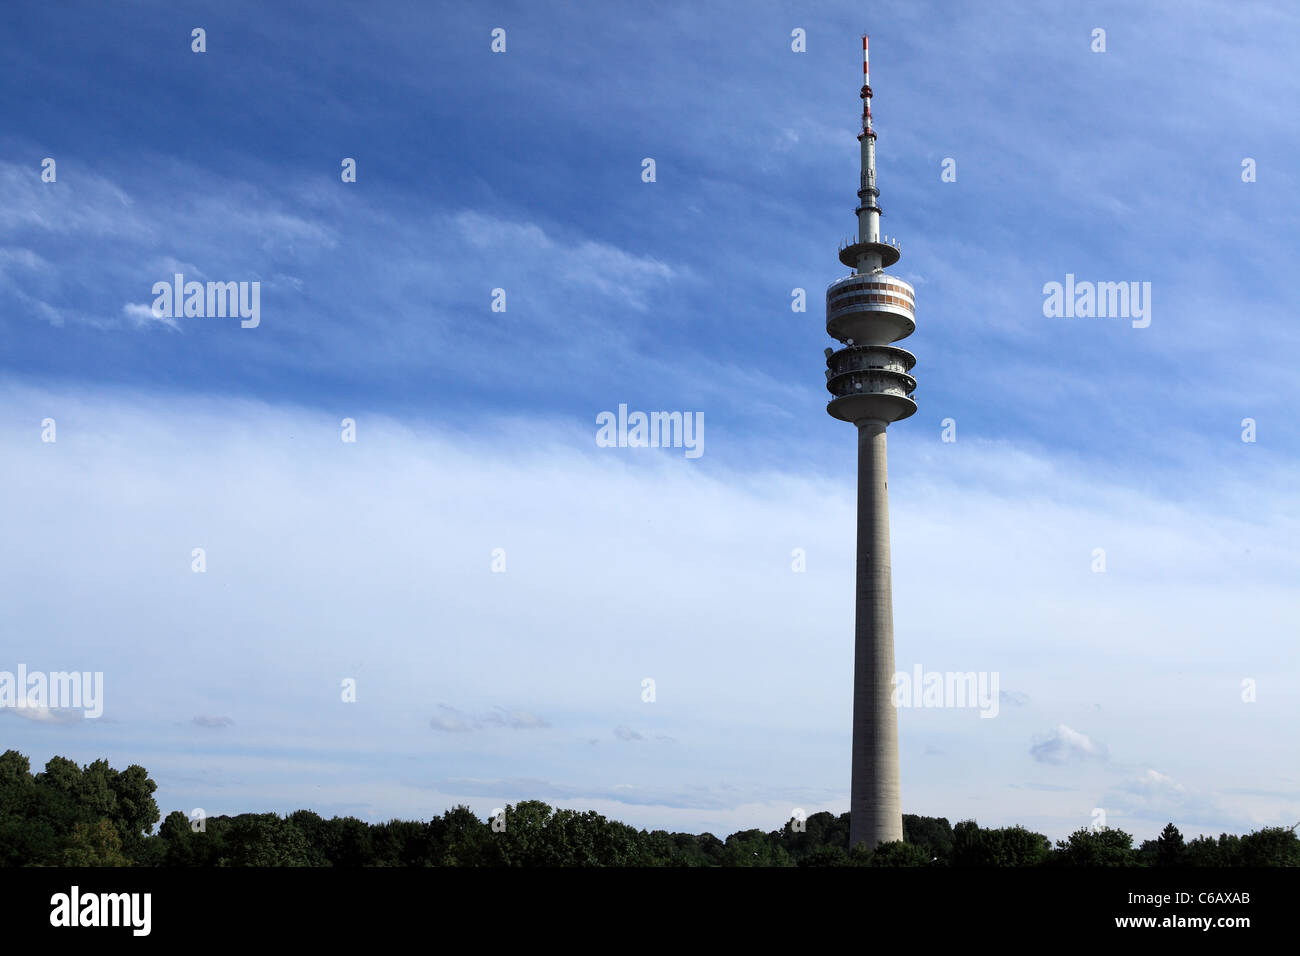 La Torre Olimpica (Olympiaturm), la torre televisiva (Fernsehturm), nel Parco Olimpico di Monaco, Baviera, Germania. Foto Stock